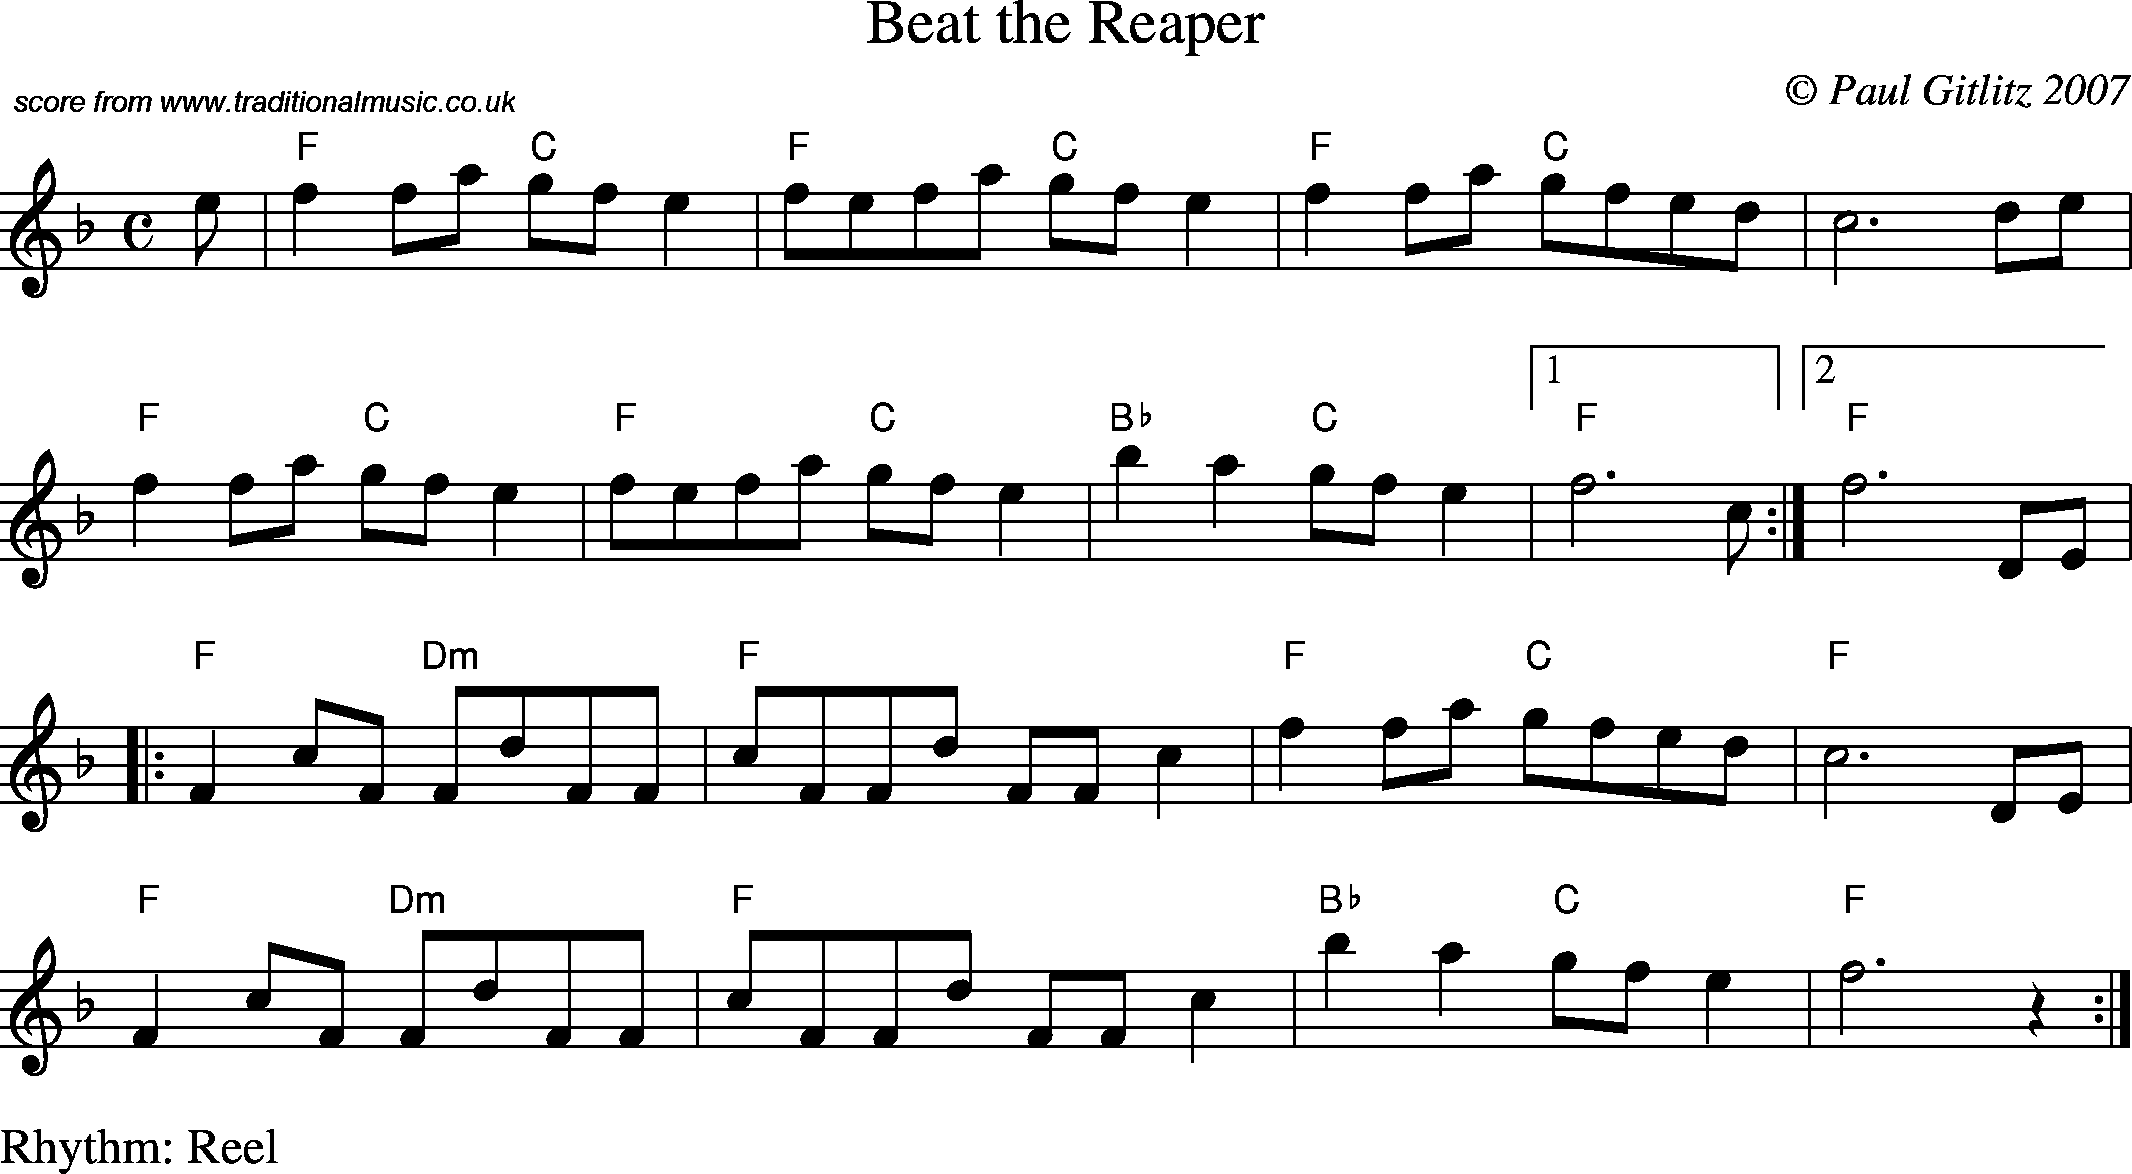 Sheet Music Score for Reel - Beat the Reaper